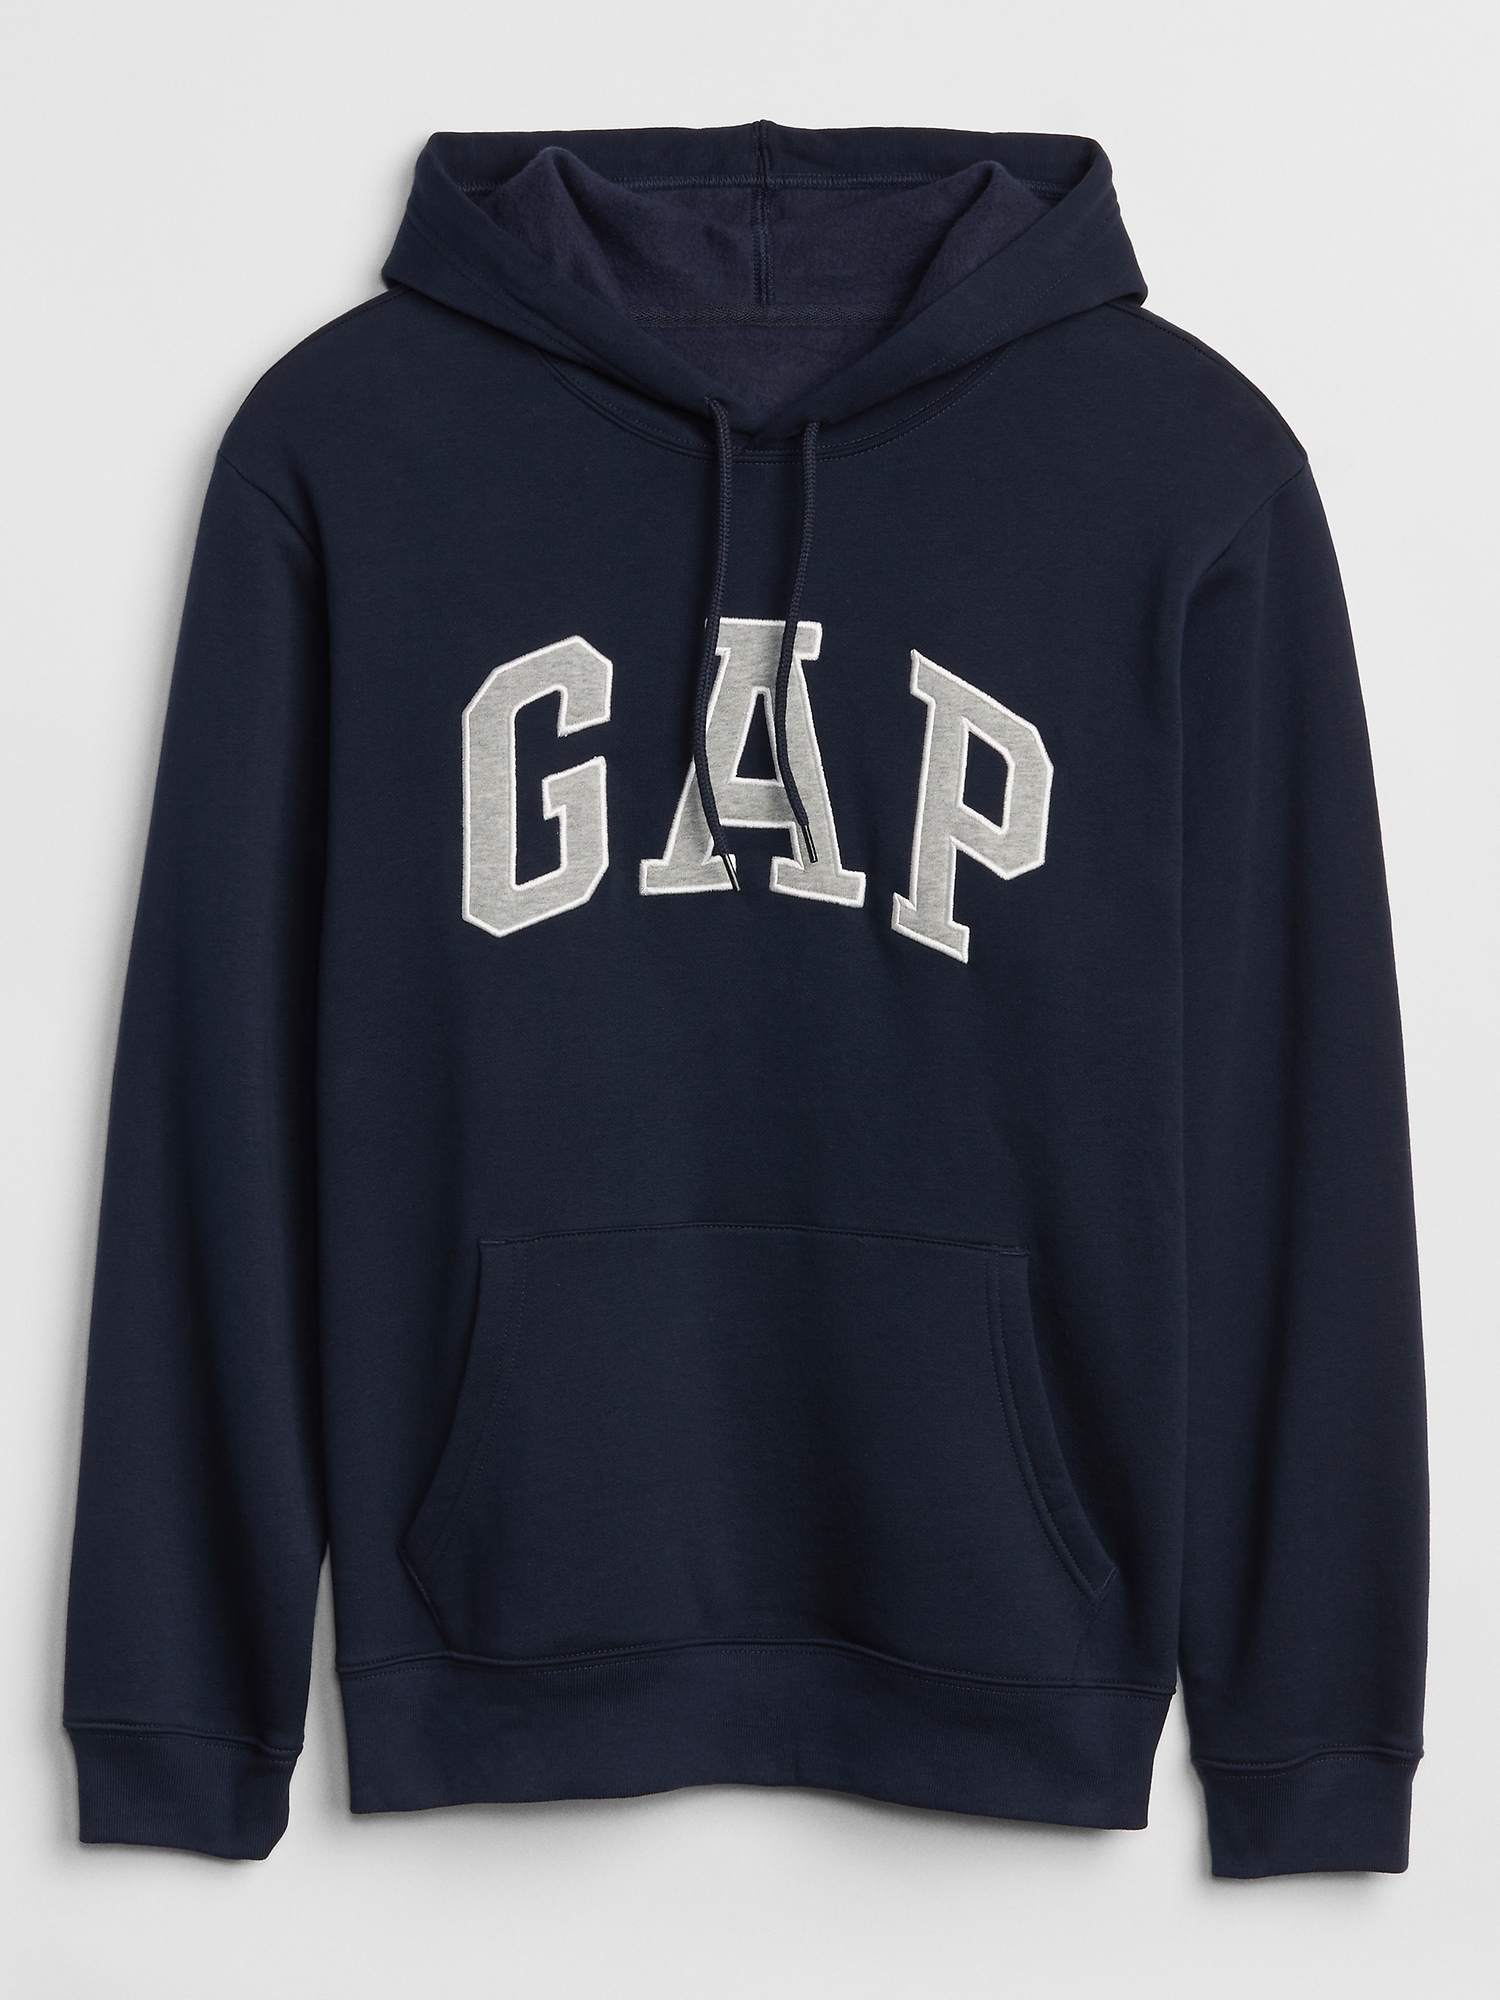 gap logo jackets